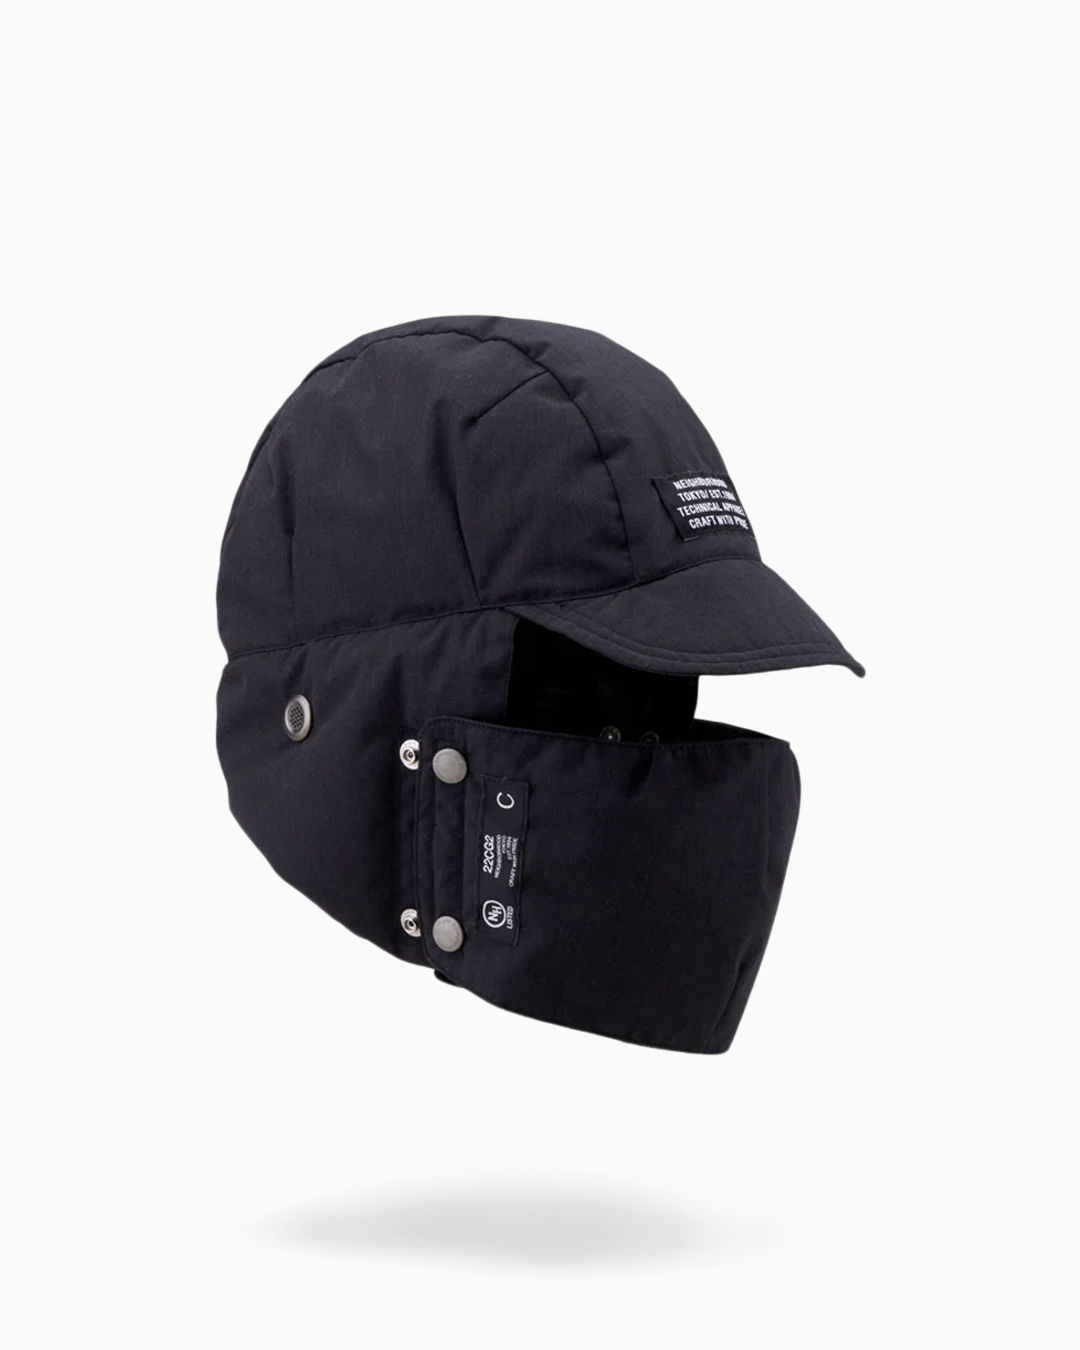 Nanga Takibi Down Cap $204 Neighborhood Headwear Beanies Black